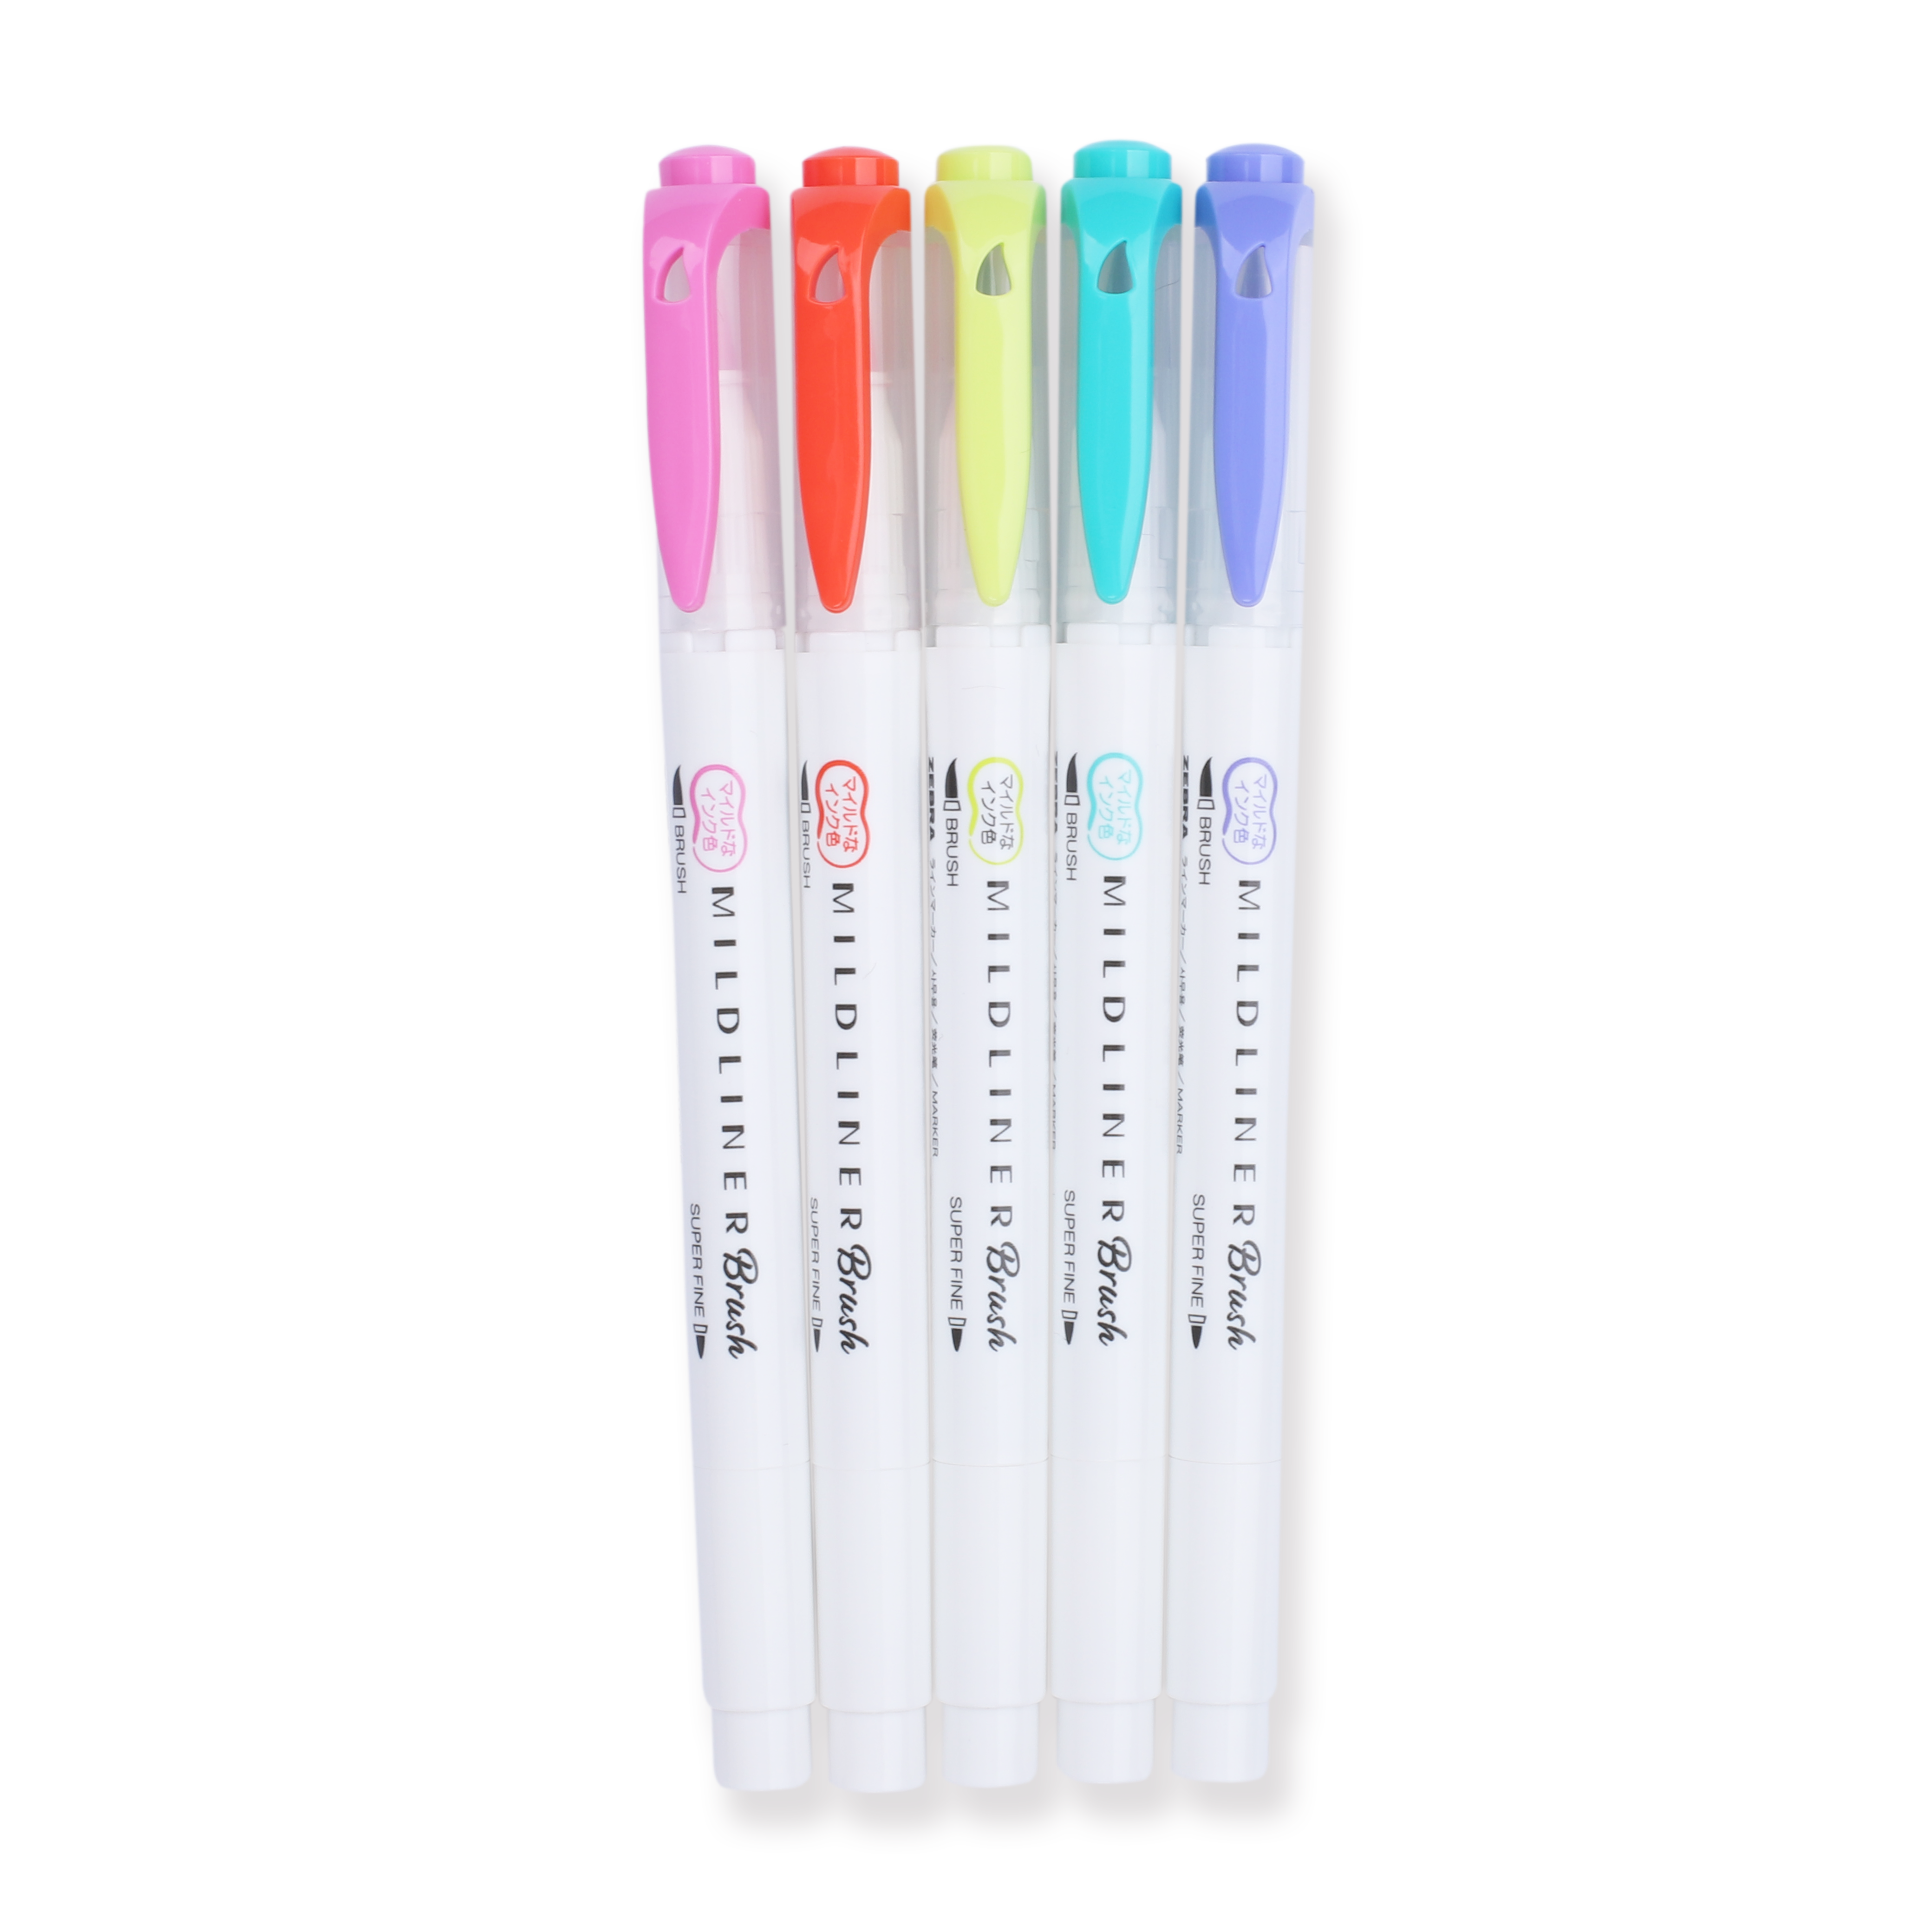 Zebra Mildliner Double Ended Brush Pen - Bright Color Set